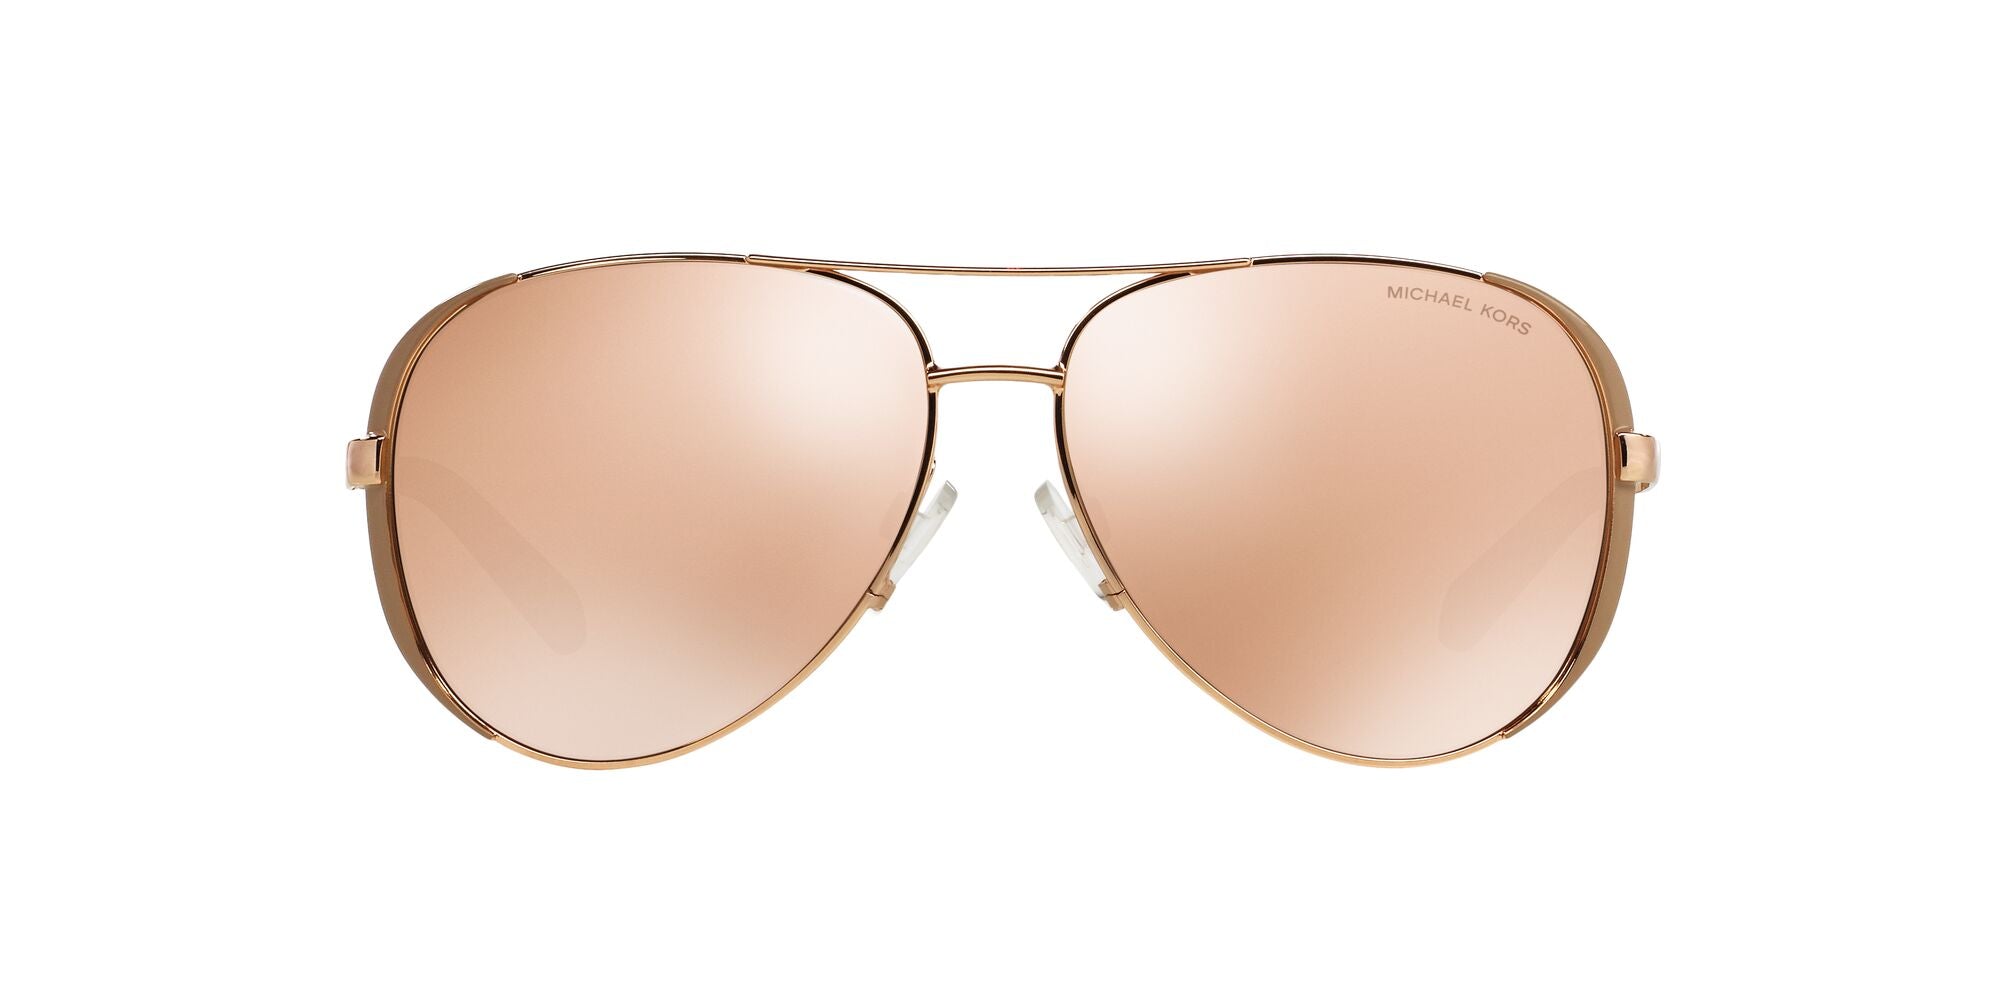 Michael Kors 0MK5004 Sunglasses